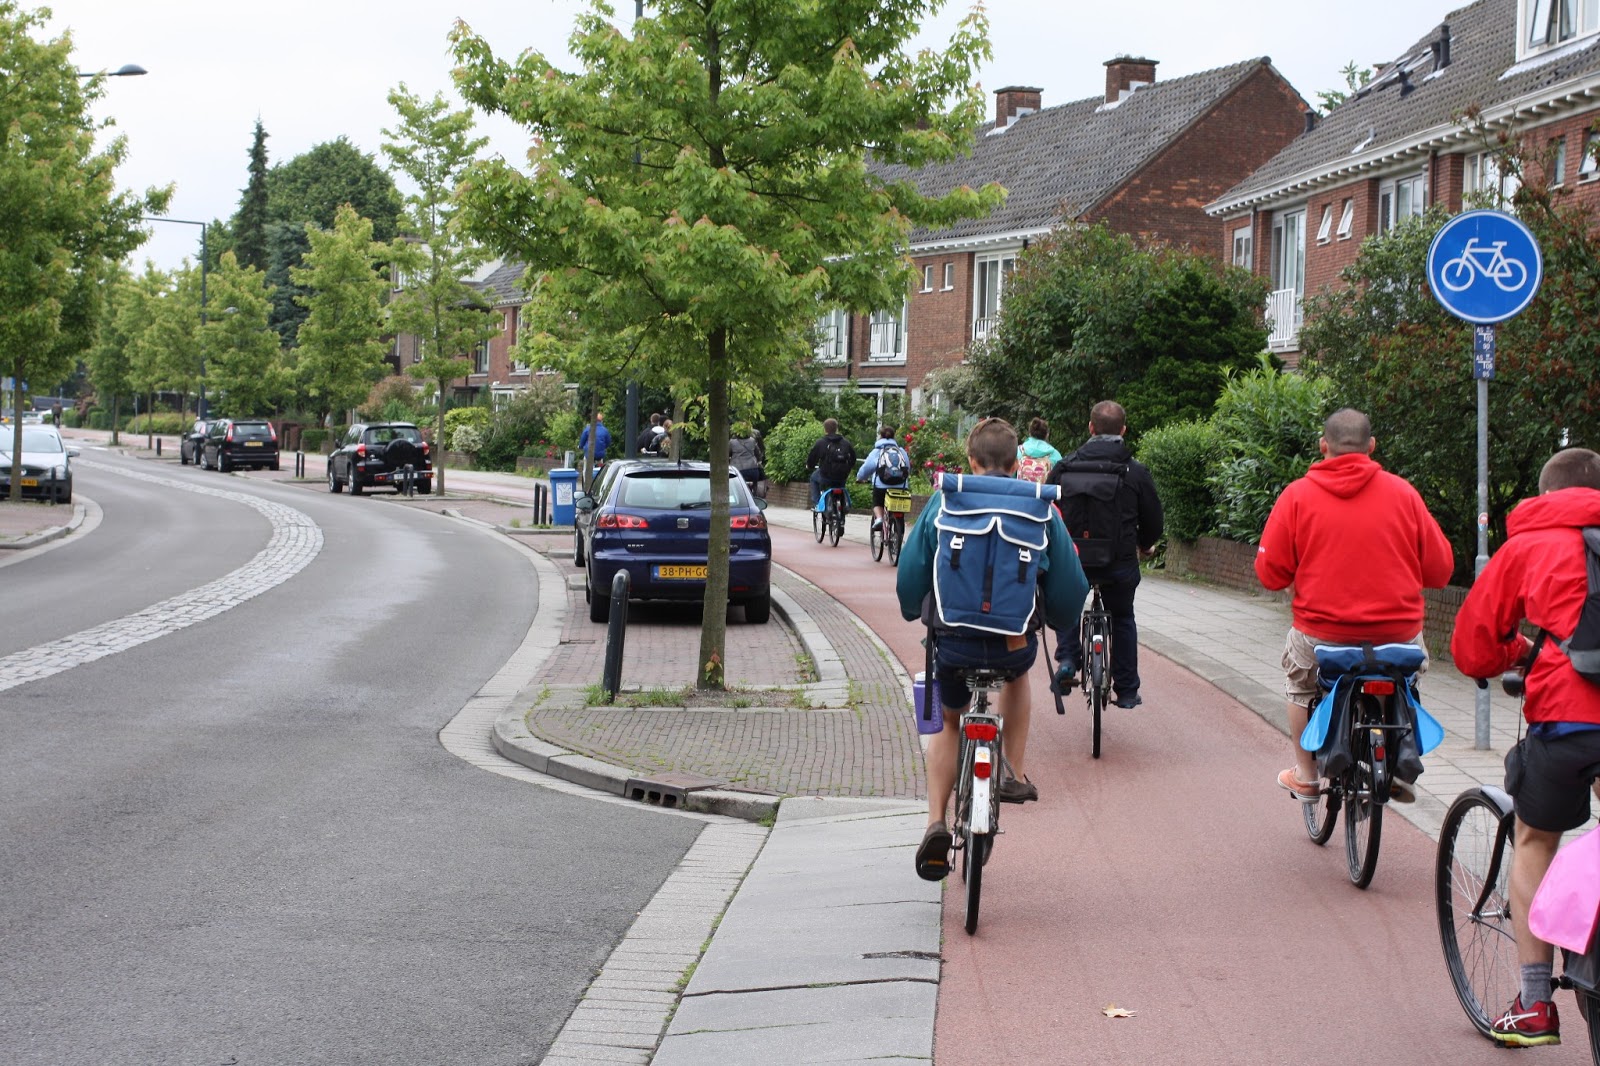 Dutch Cycle Lane - Netherlands